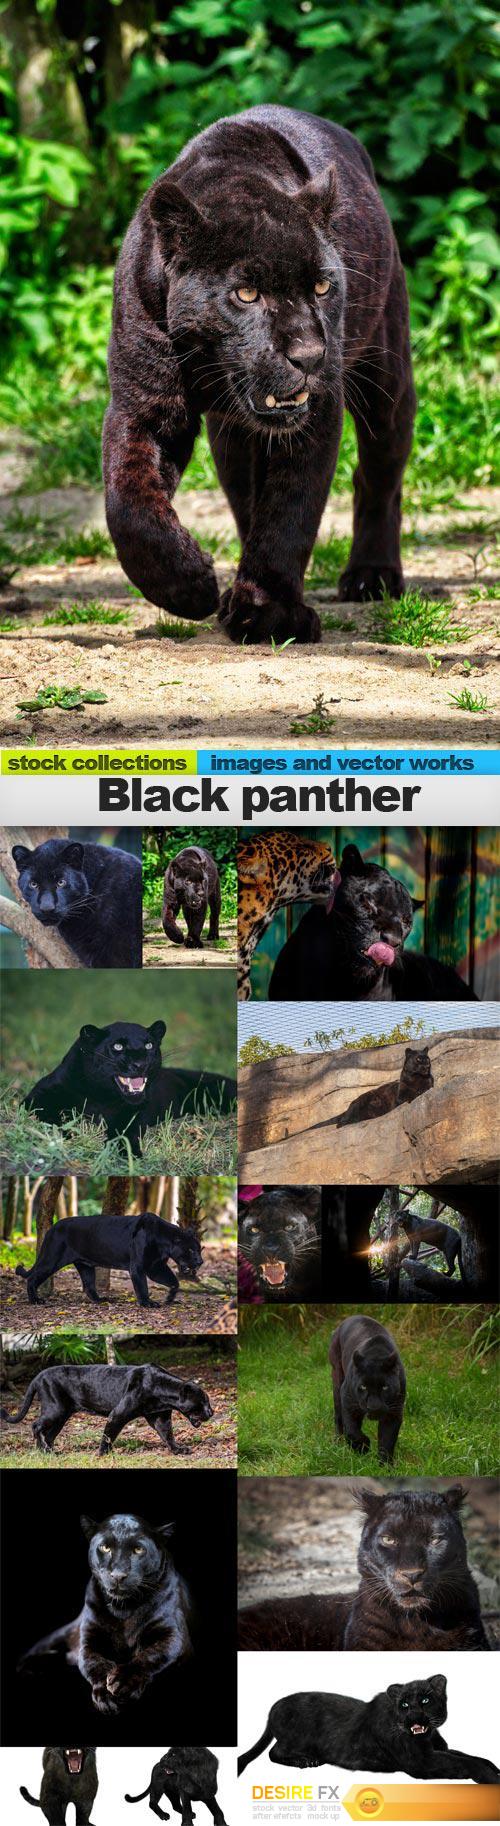 Black panther, 15 x UHQ JPEG